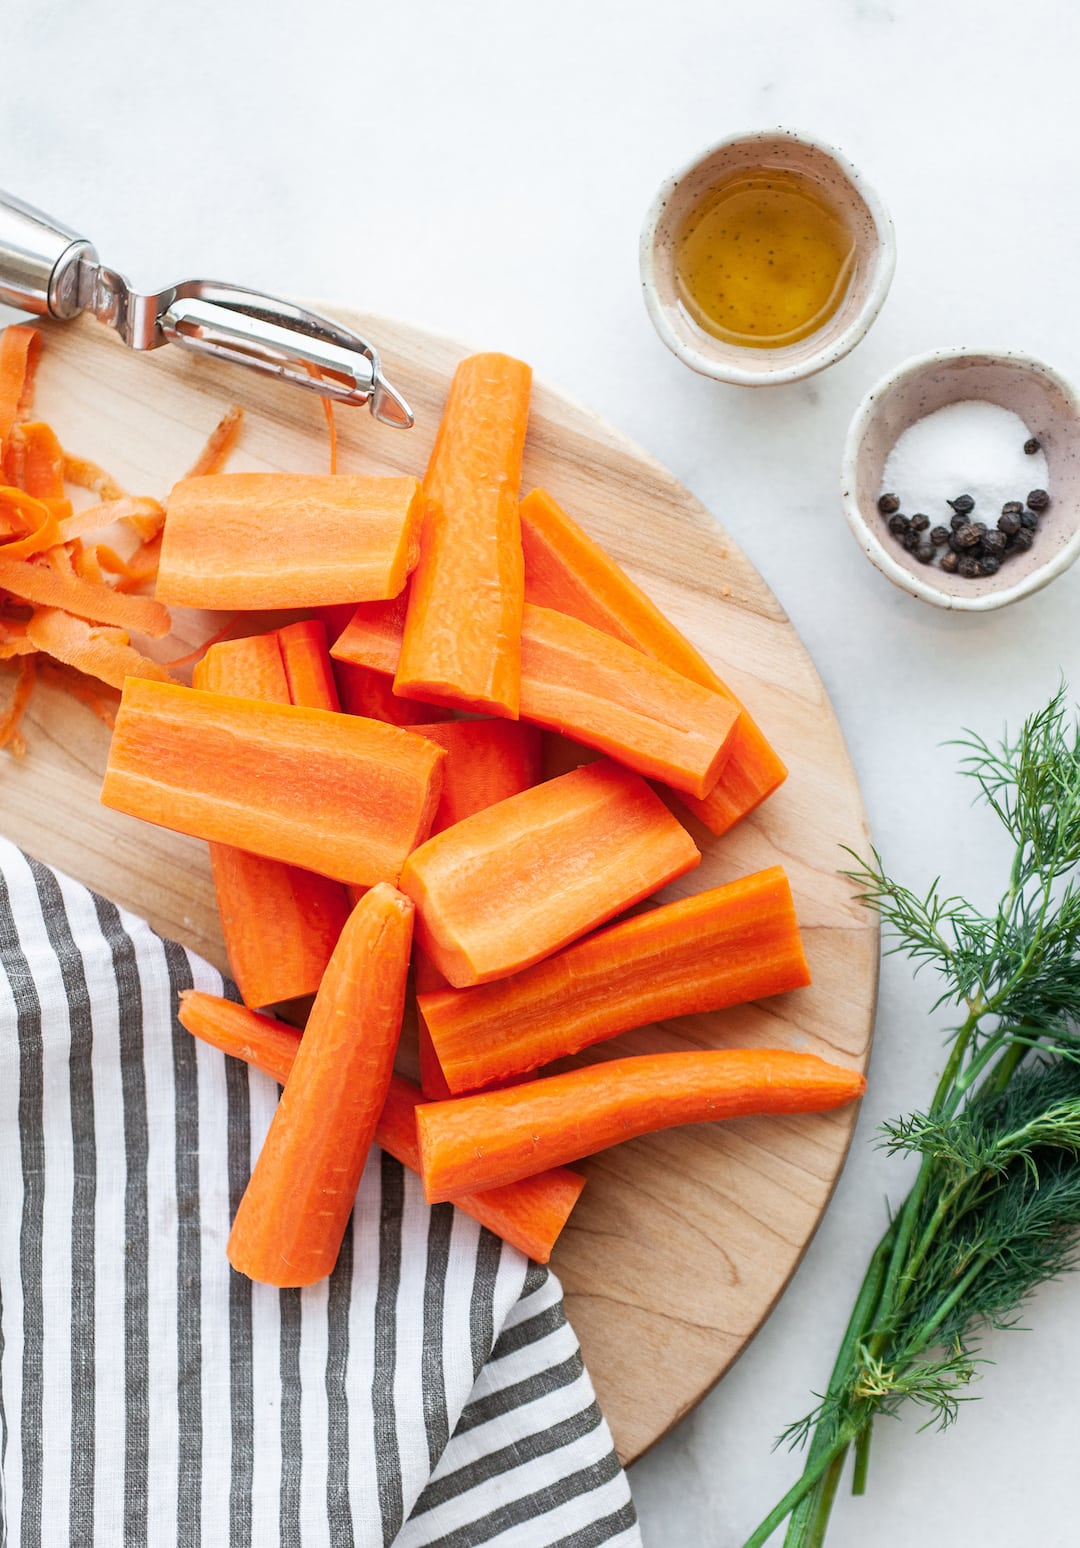 Ingredients for Incredible Air Fryer Carrots